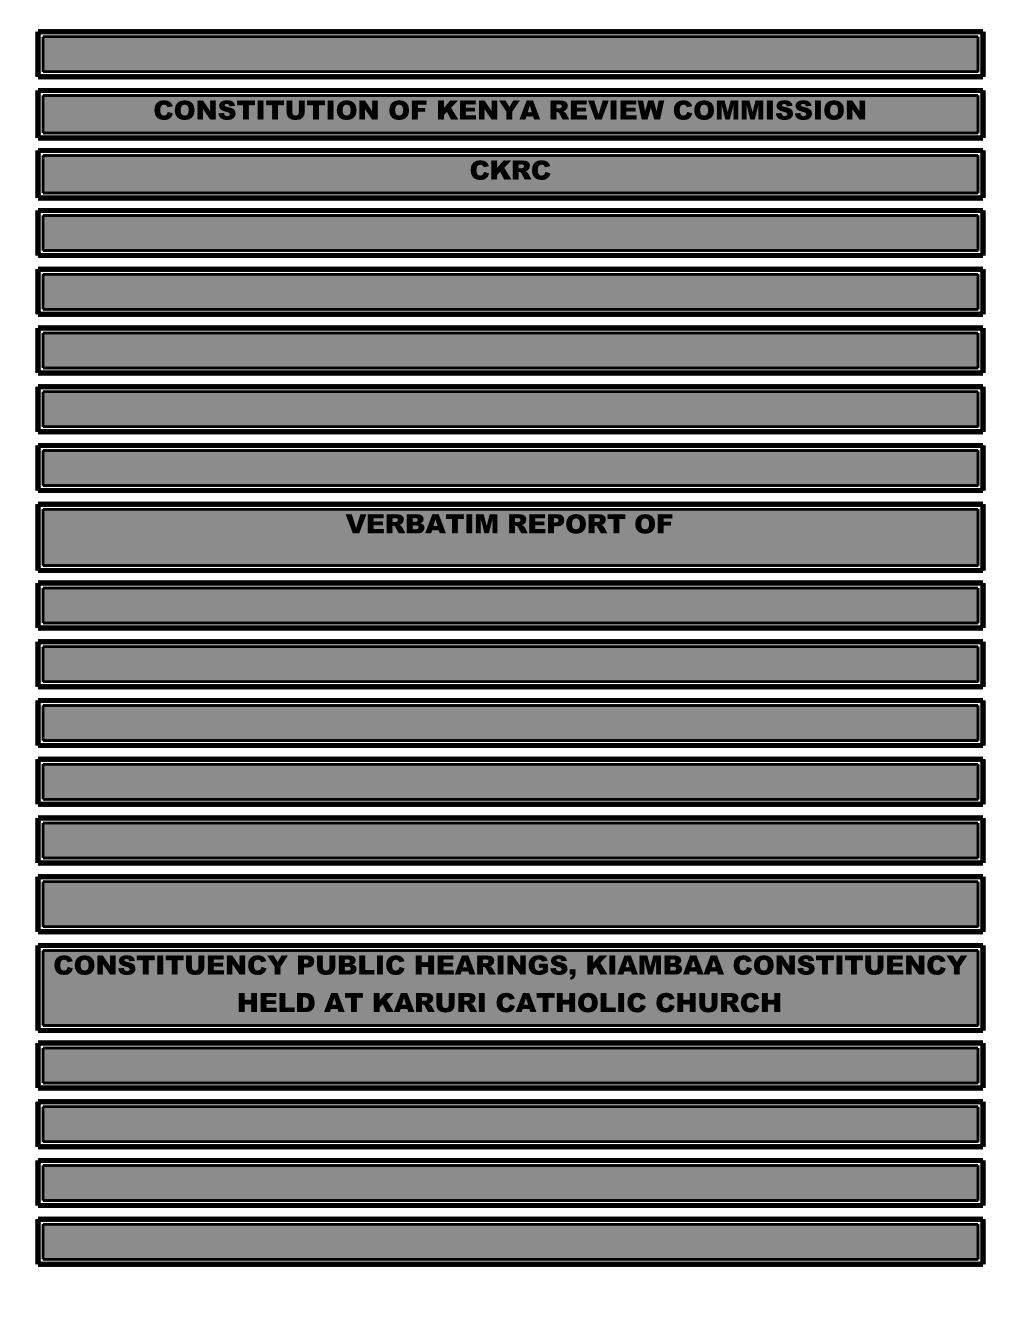 Constitution of Kenya Review Commission Ckrc Verbatim